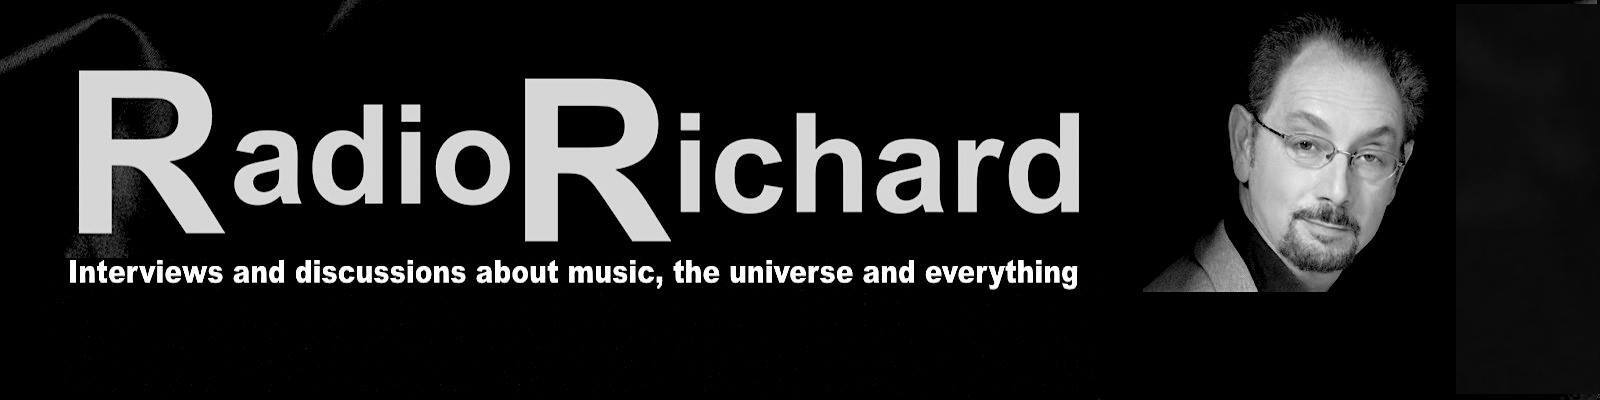 Radio Richard | Richard Niles Podcast